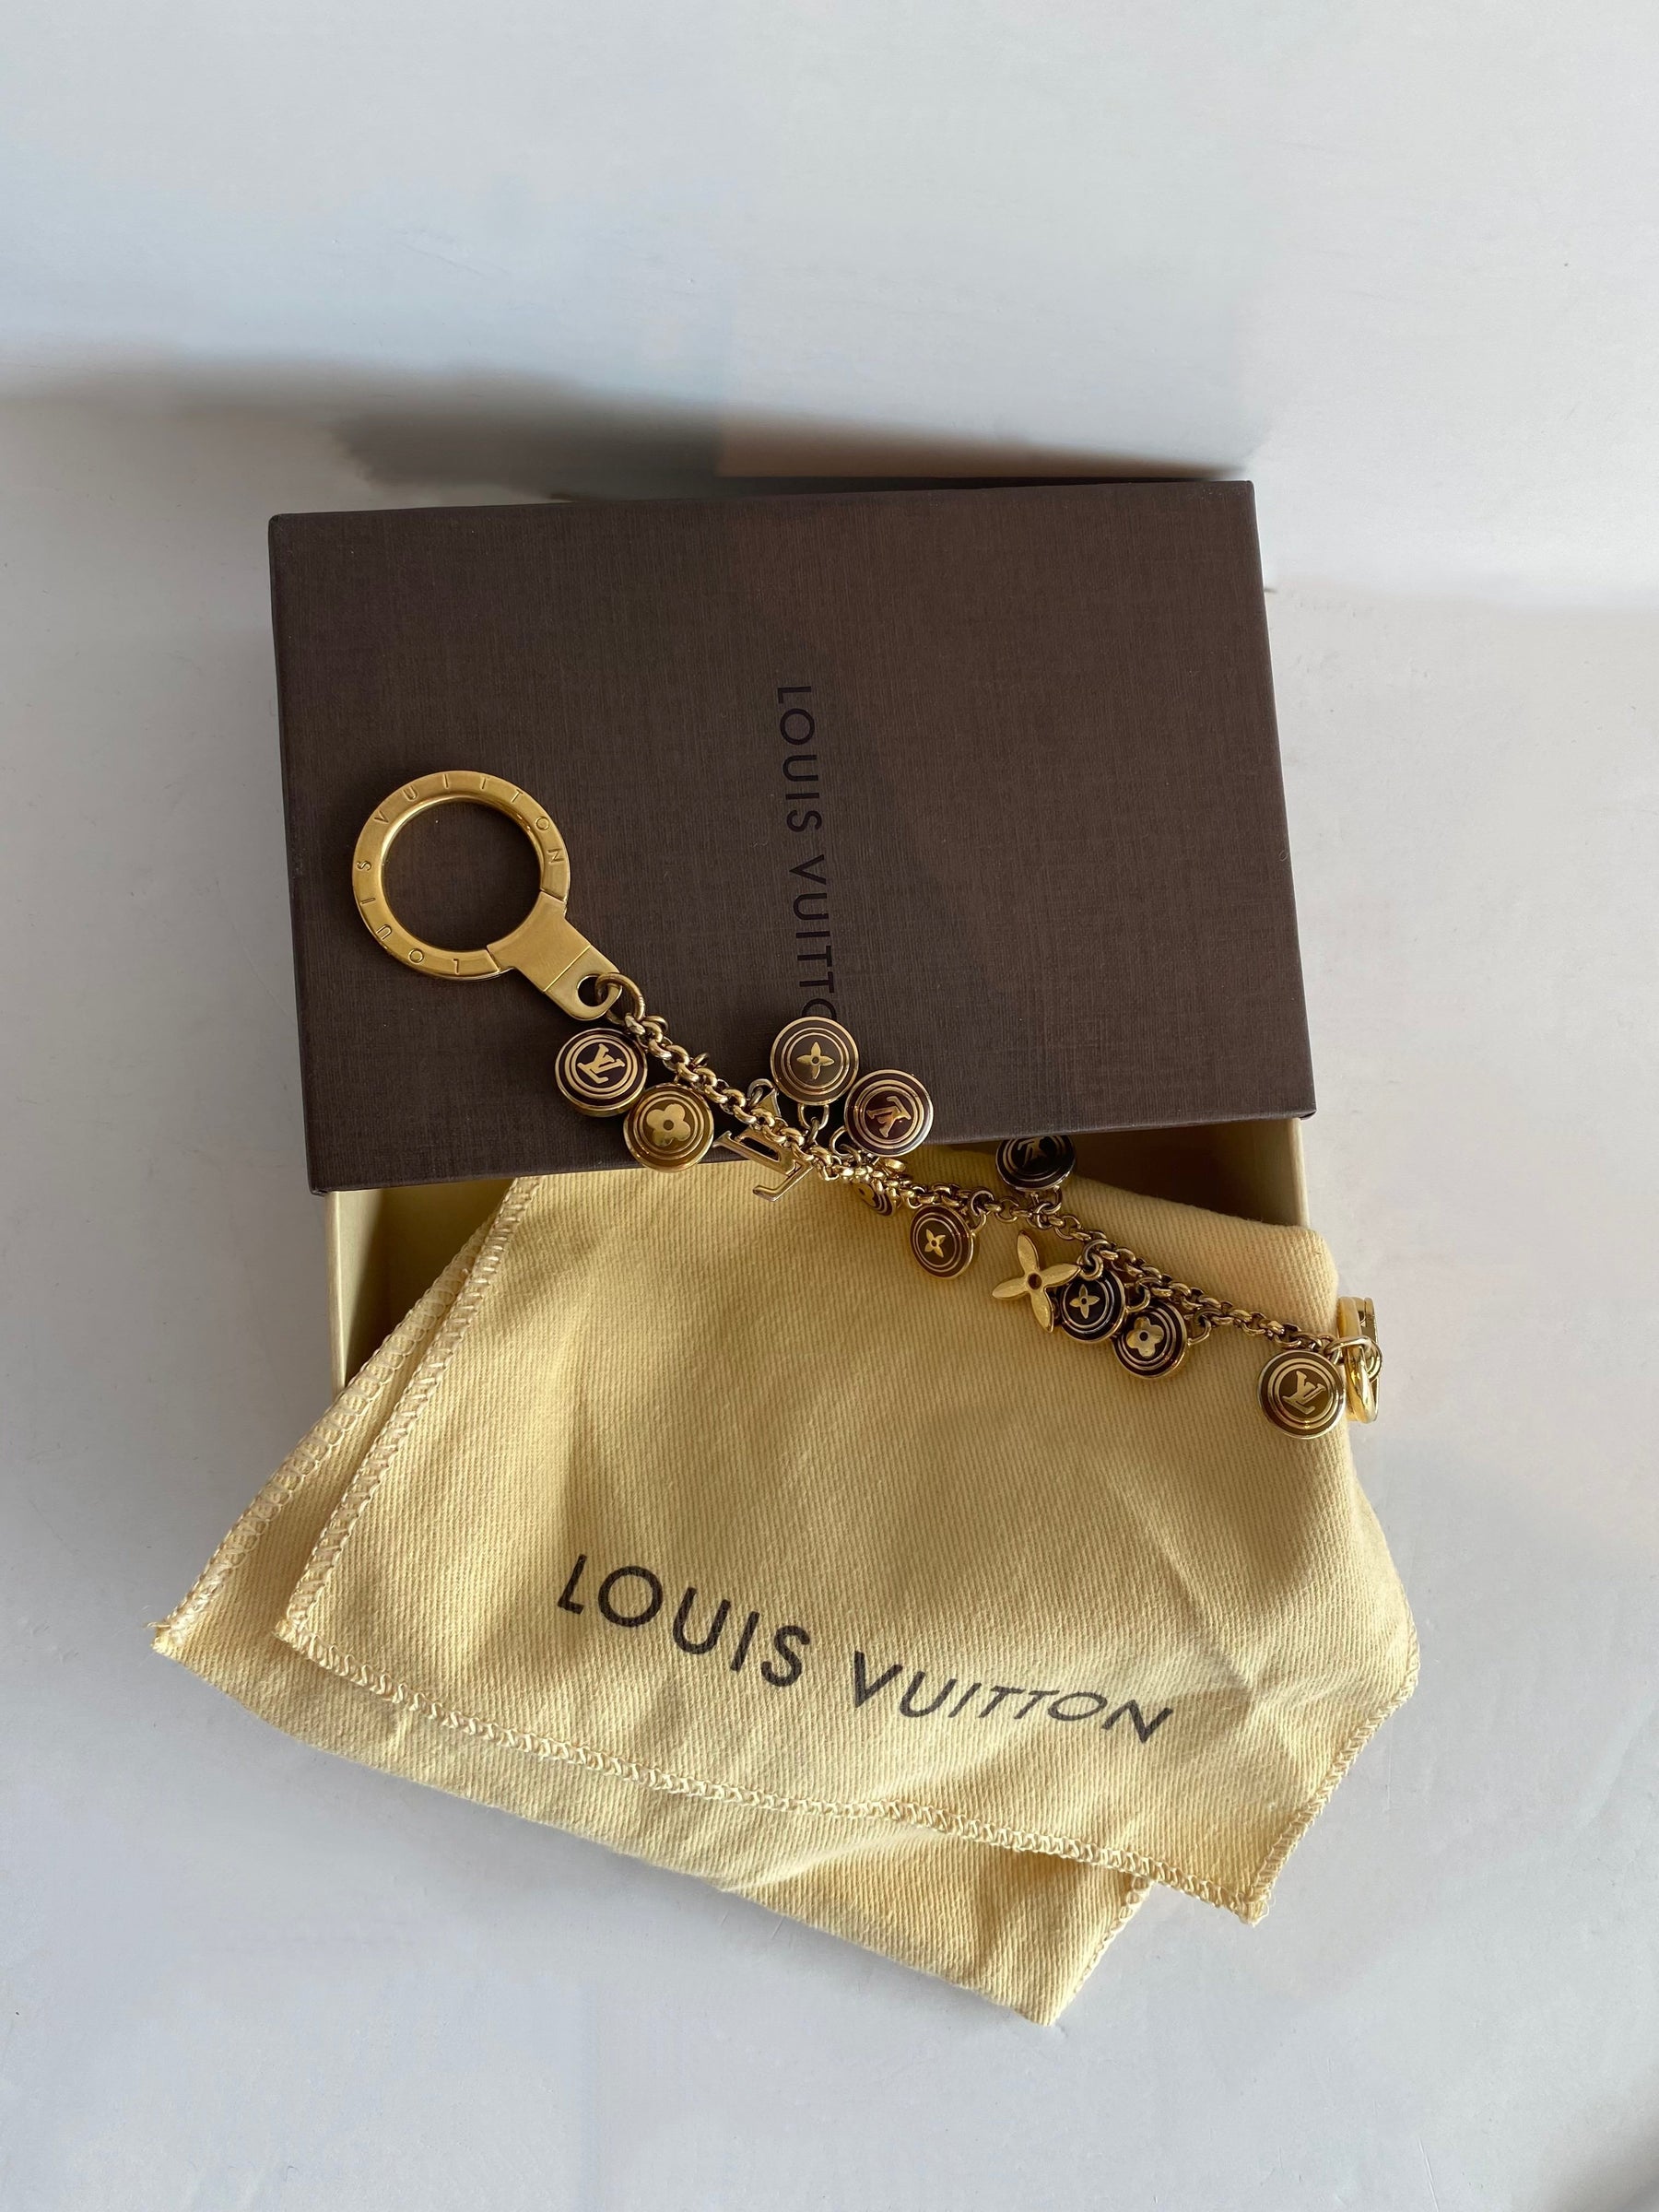 Louis Vuitton Bag Charm with Box